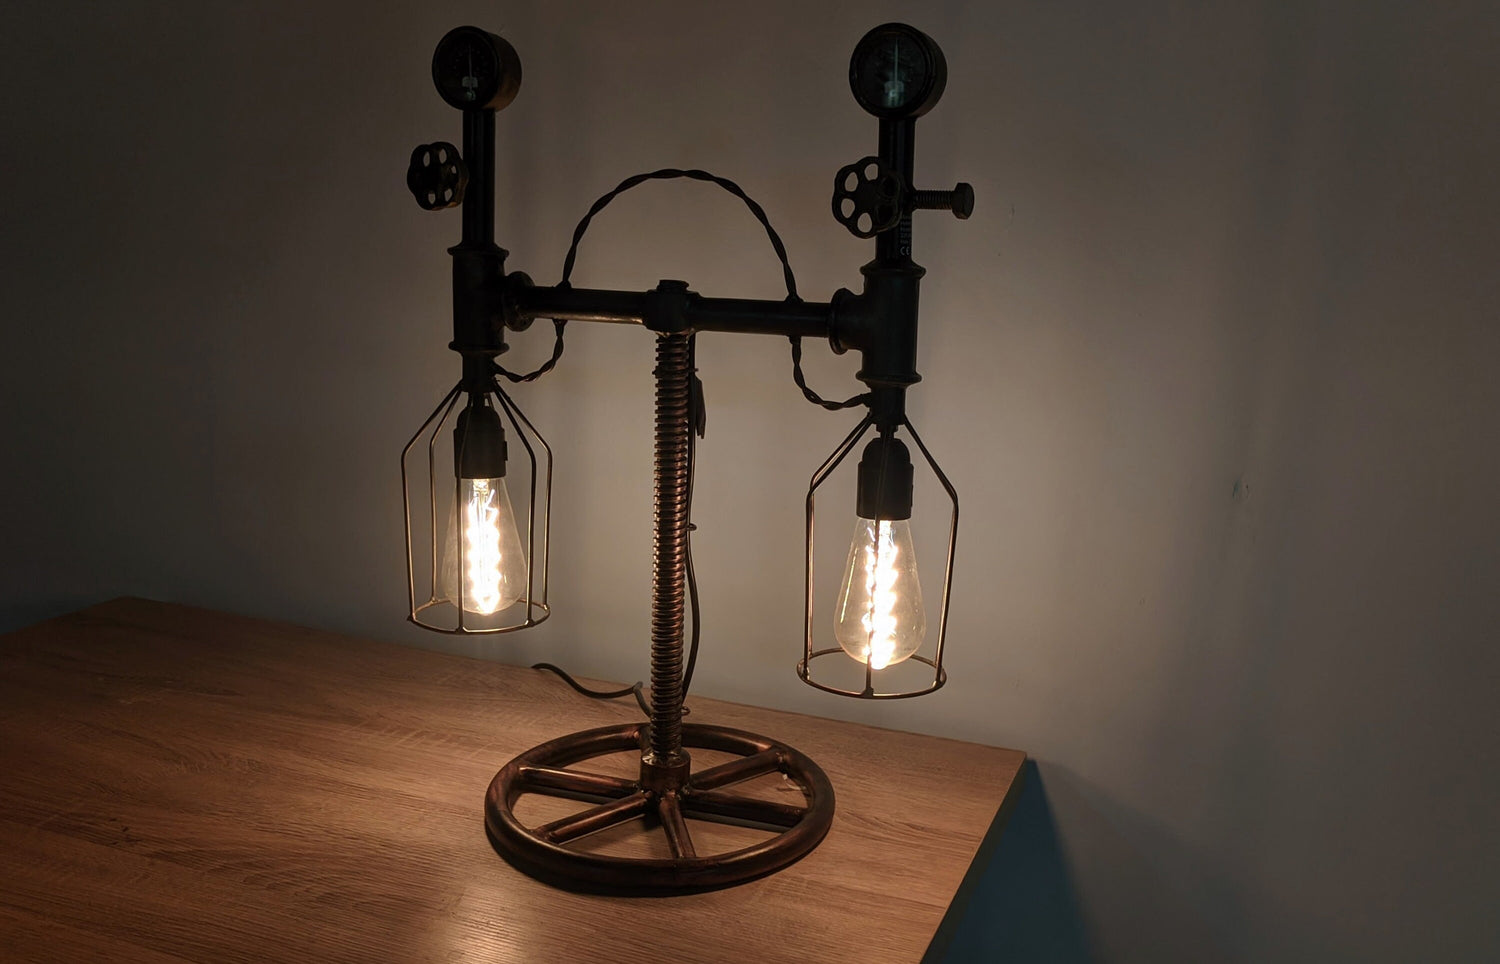 Unique Side Table Lamp - Industrial Light Meets Contemporary Design